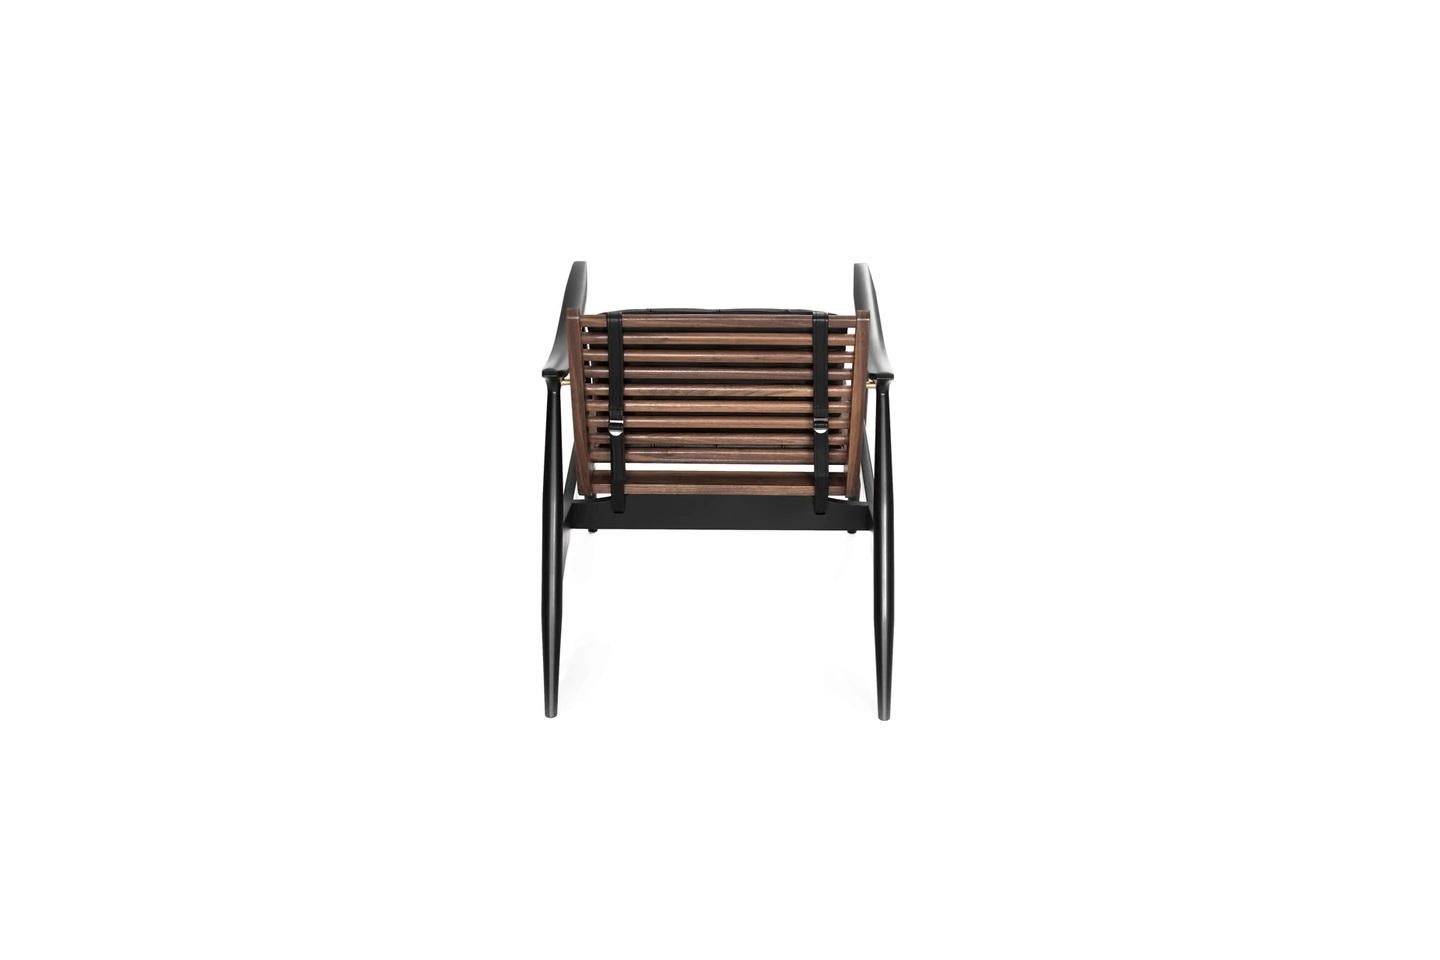 Mahogany Atra Lounge Chair by Atra Design